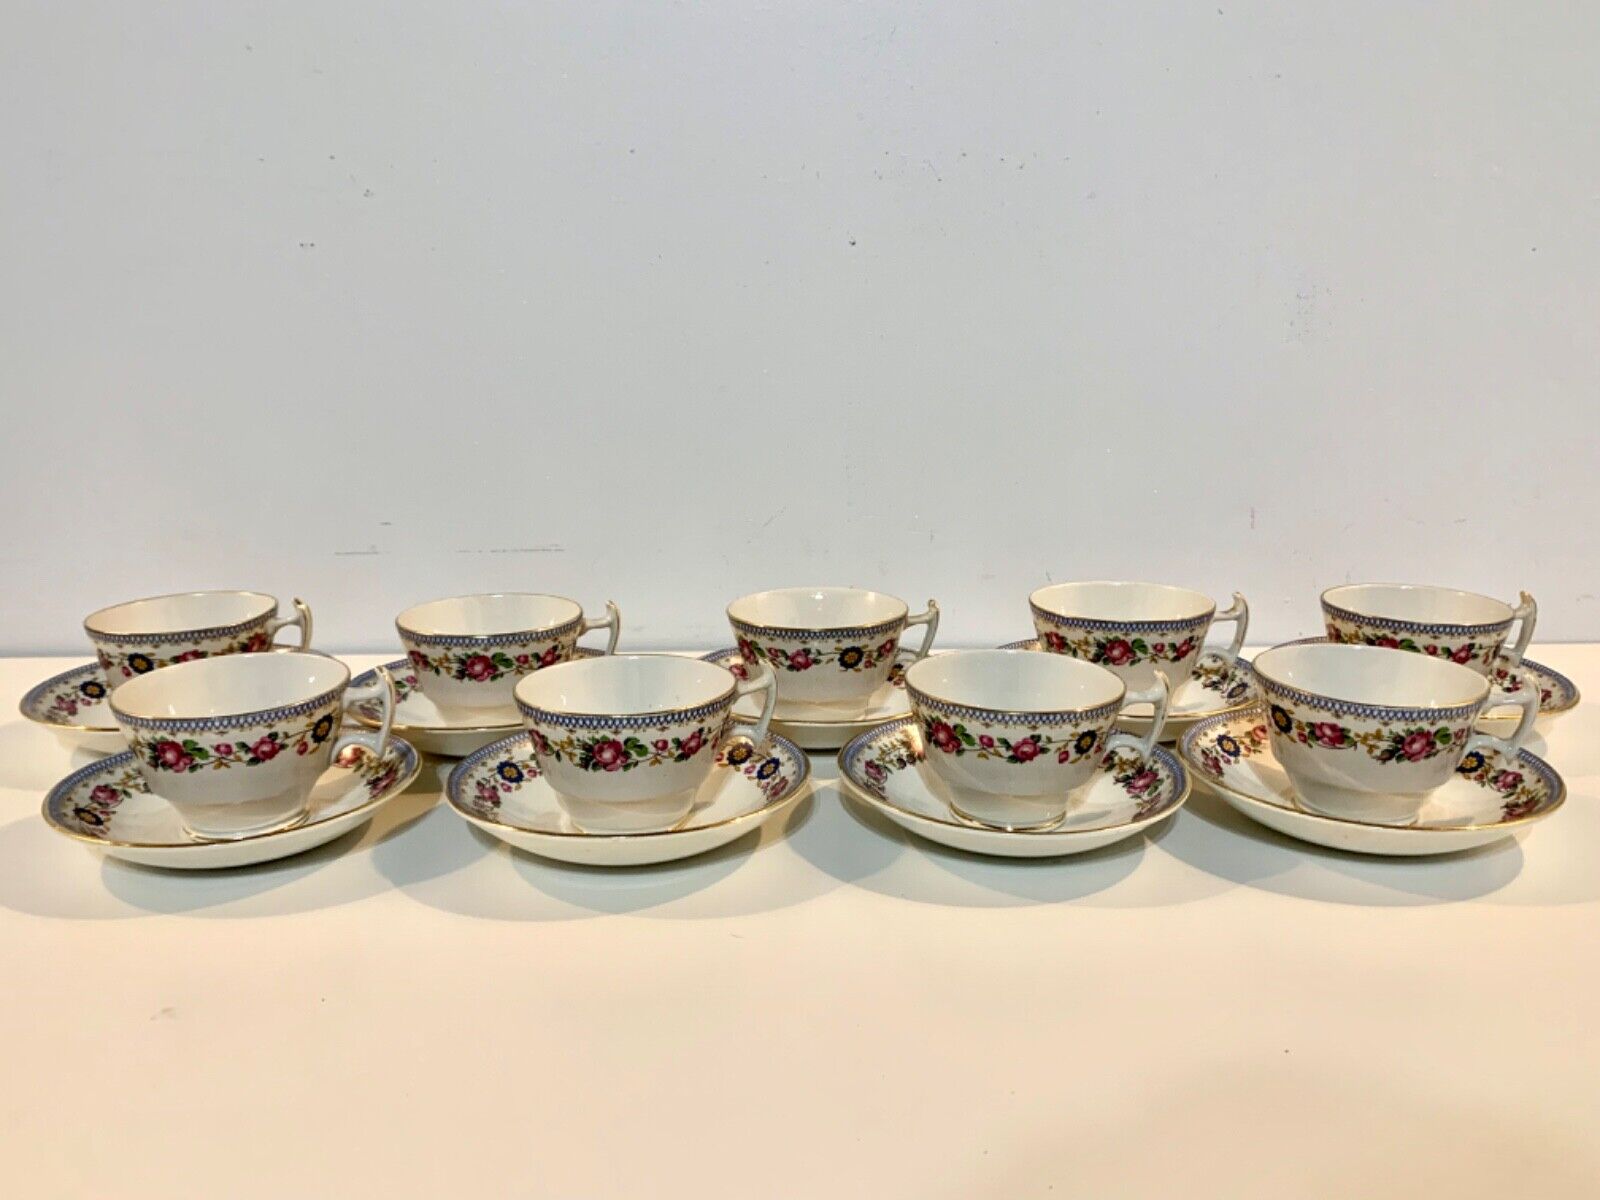 Ant Booths Staffordshire Porcelain Set of 9 Cups & Saucers w/ Rose Floral Dec.